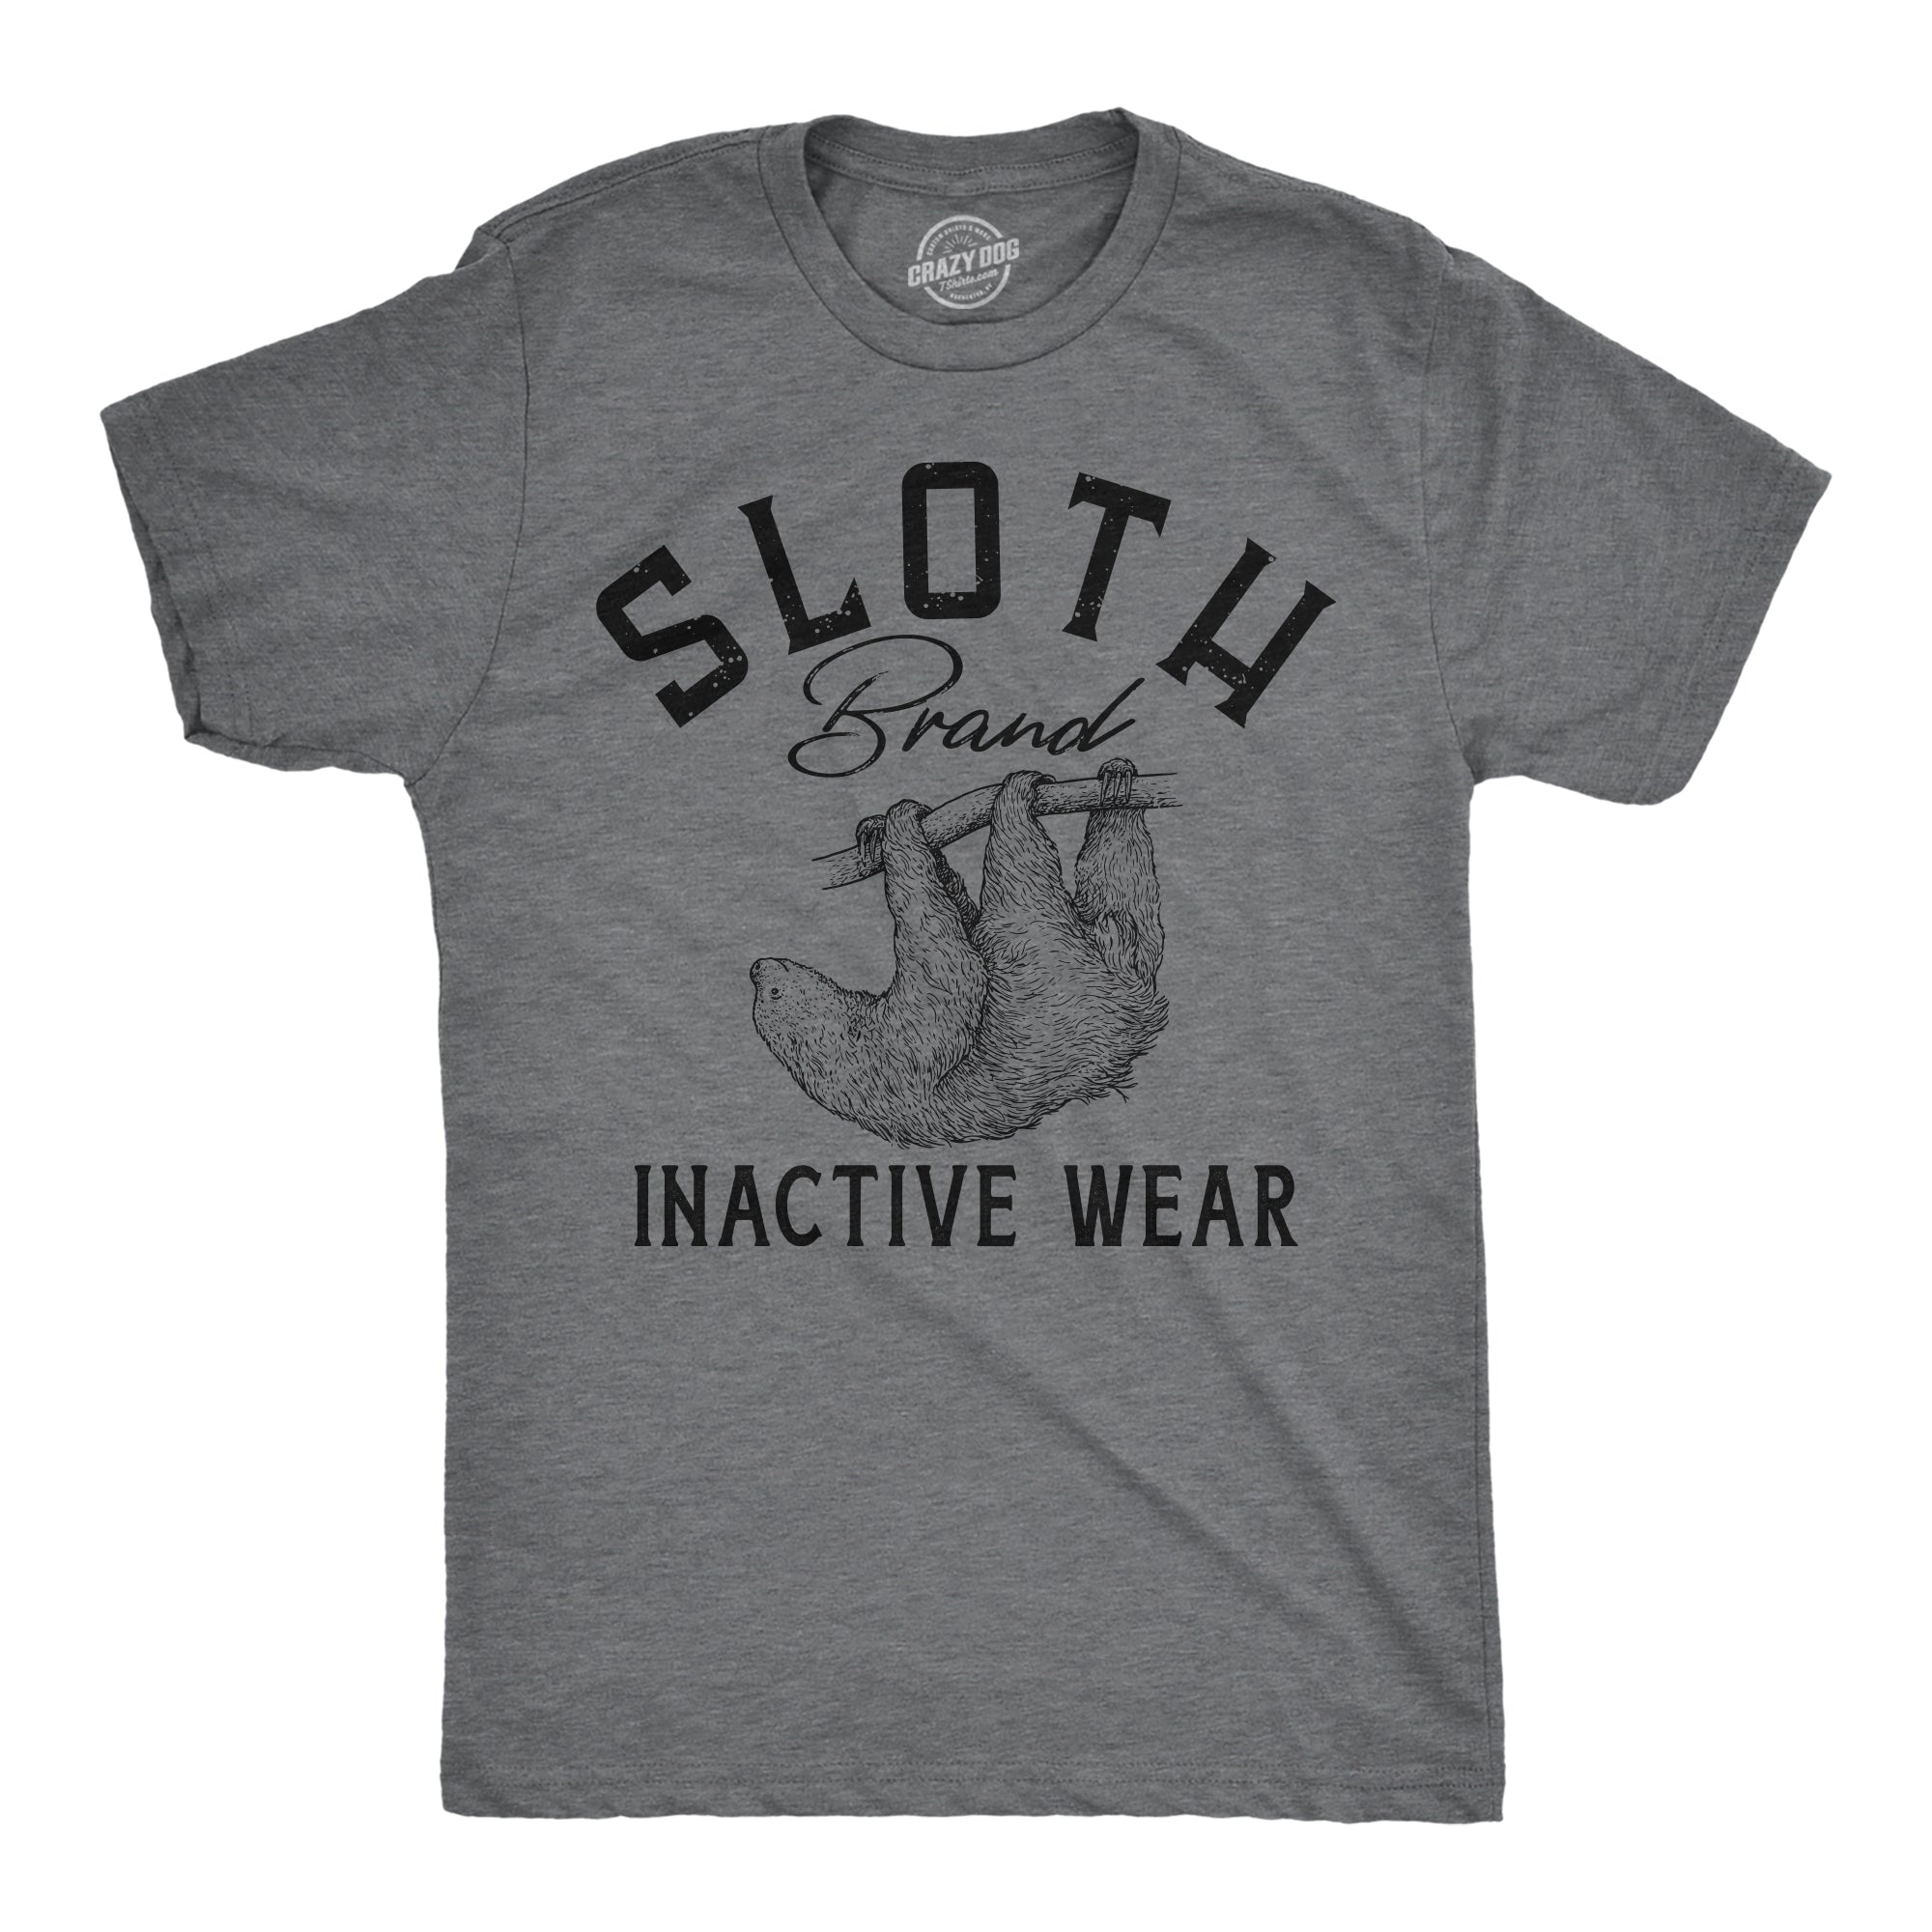 Funny Dark Heather Grey - Sloth Brand Inactive Wear Sloth Brand Inactive Wear Mens T Shirt Nerdy animal sarcastic Tee